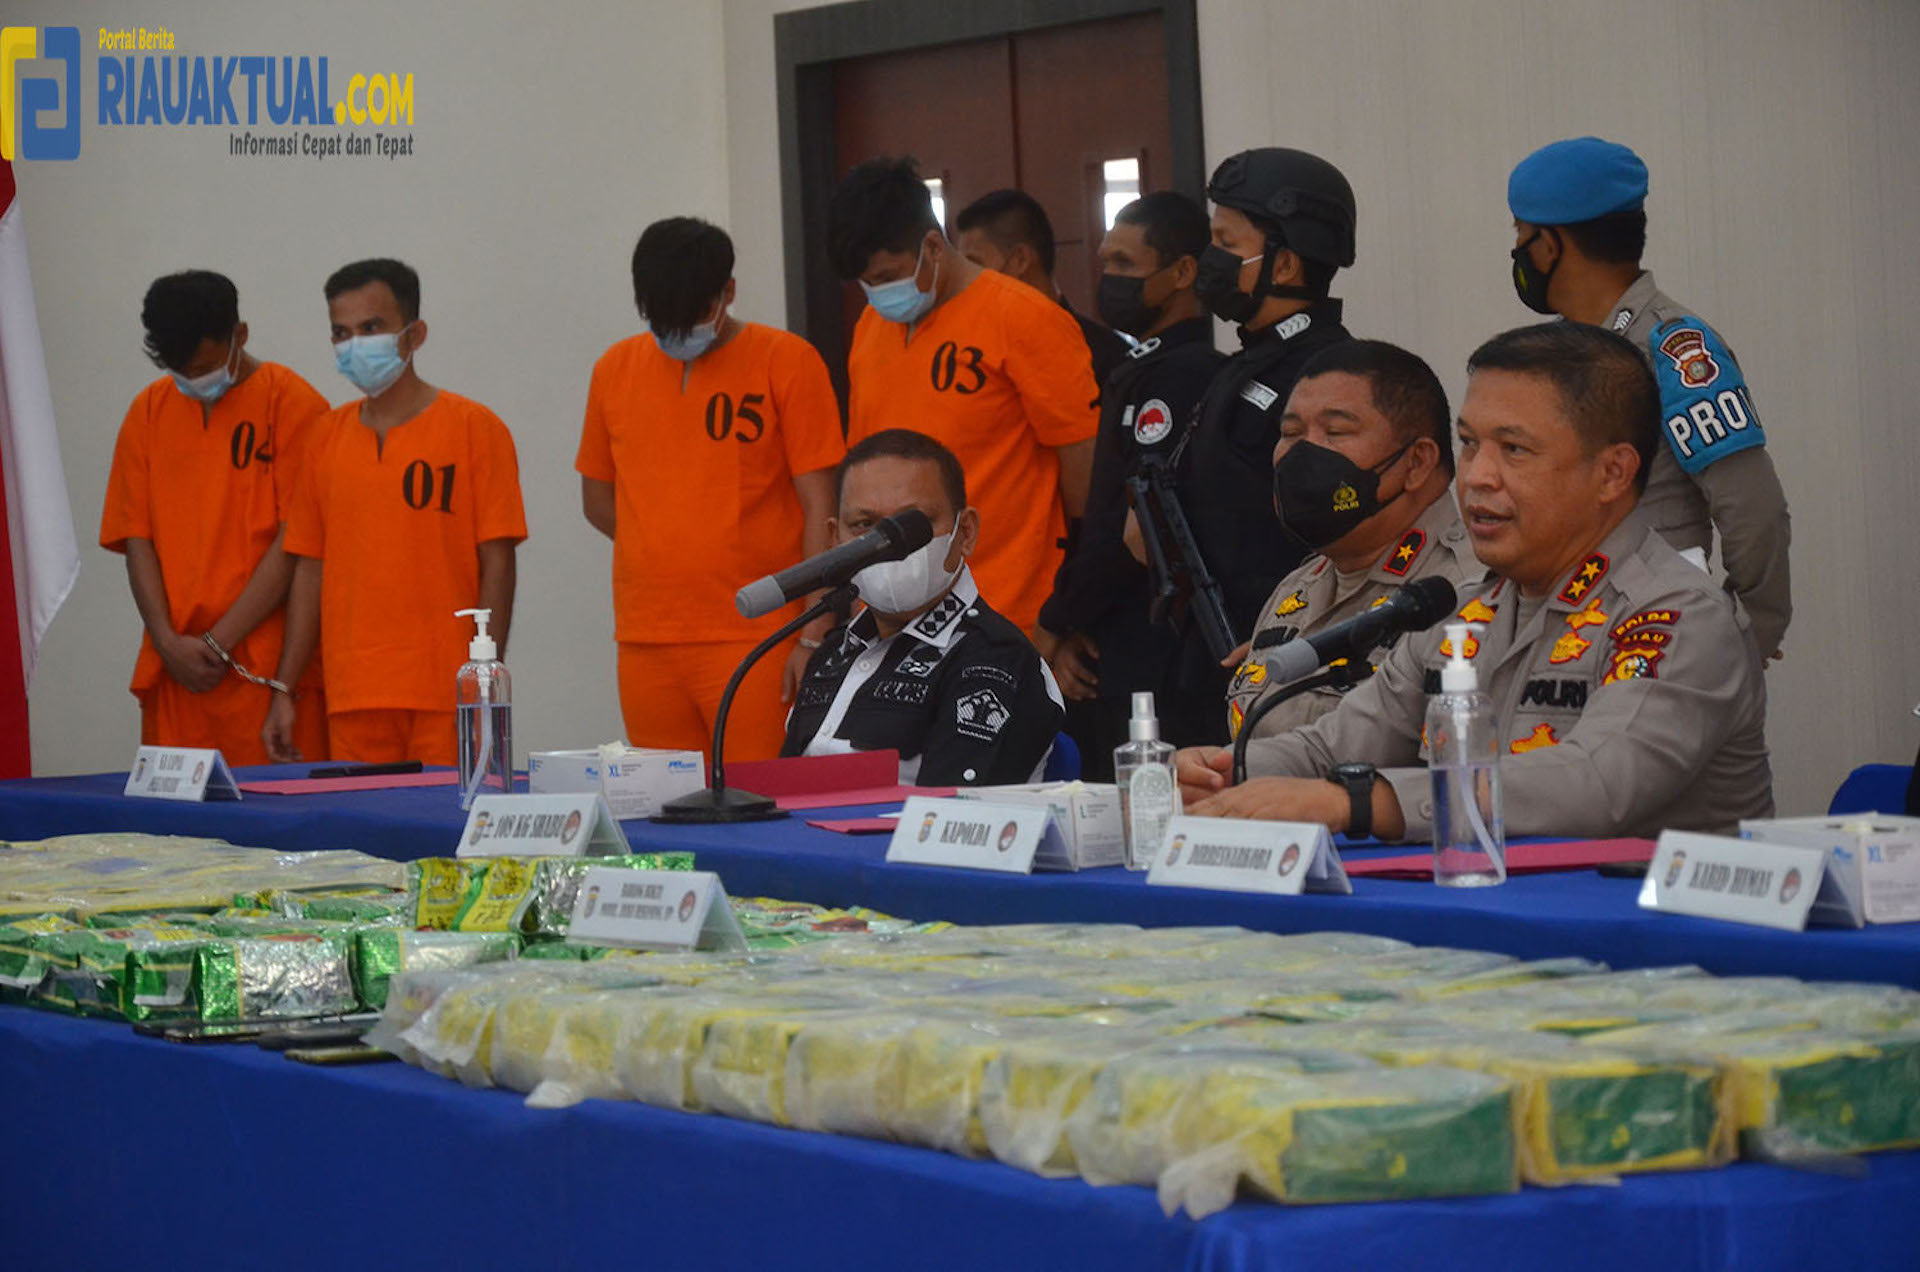 Penampakan 108 Kg Sabu Asal Malaysia Yang Berhasil Diamankan Polda Riau 